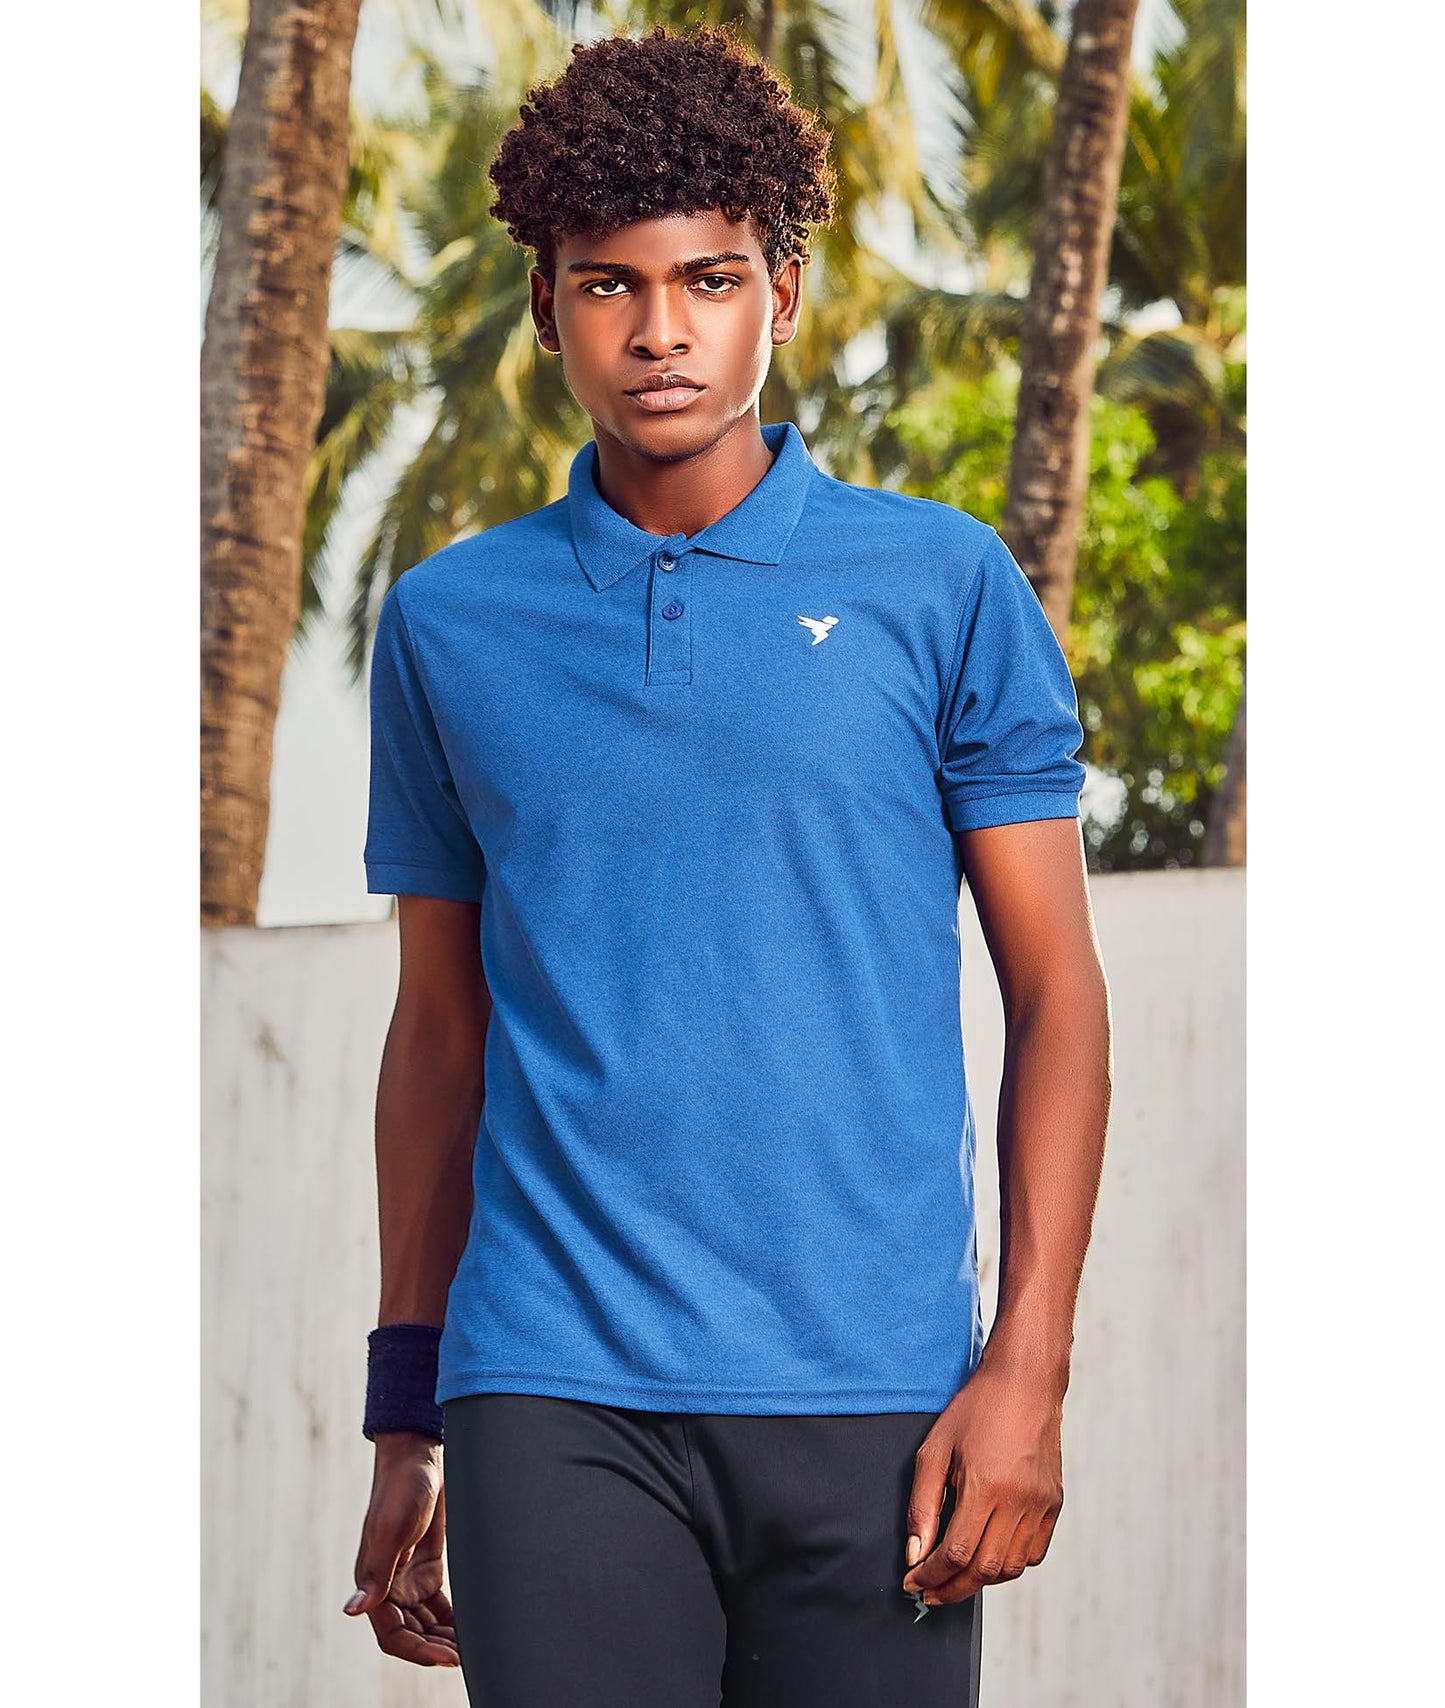 TechnoSport Polo Neck Half Sleeve Dry Fit T Shirt for Men OR-11 (Royal Blue Melange)